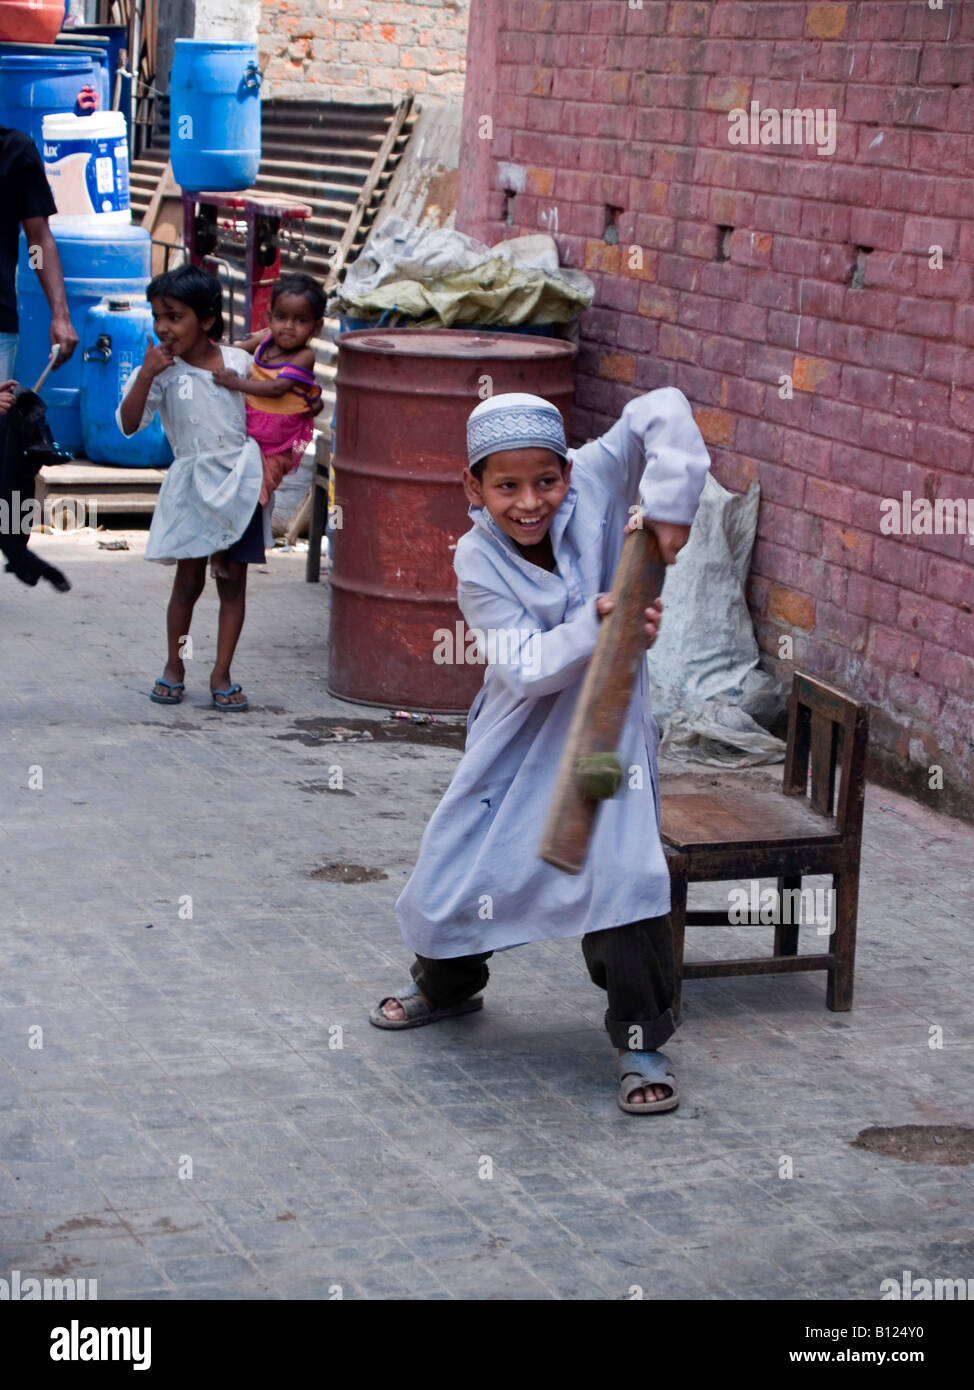 boy batting during street cricket game in Kolkata India Stock Photo